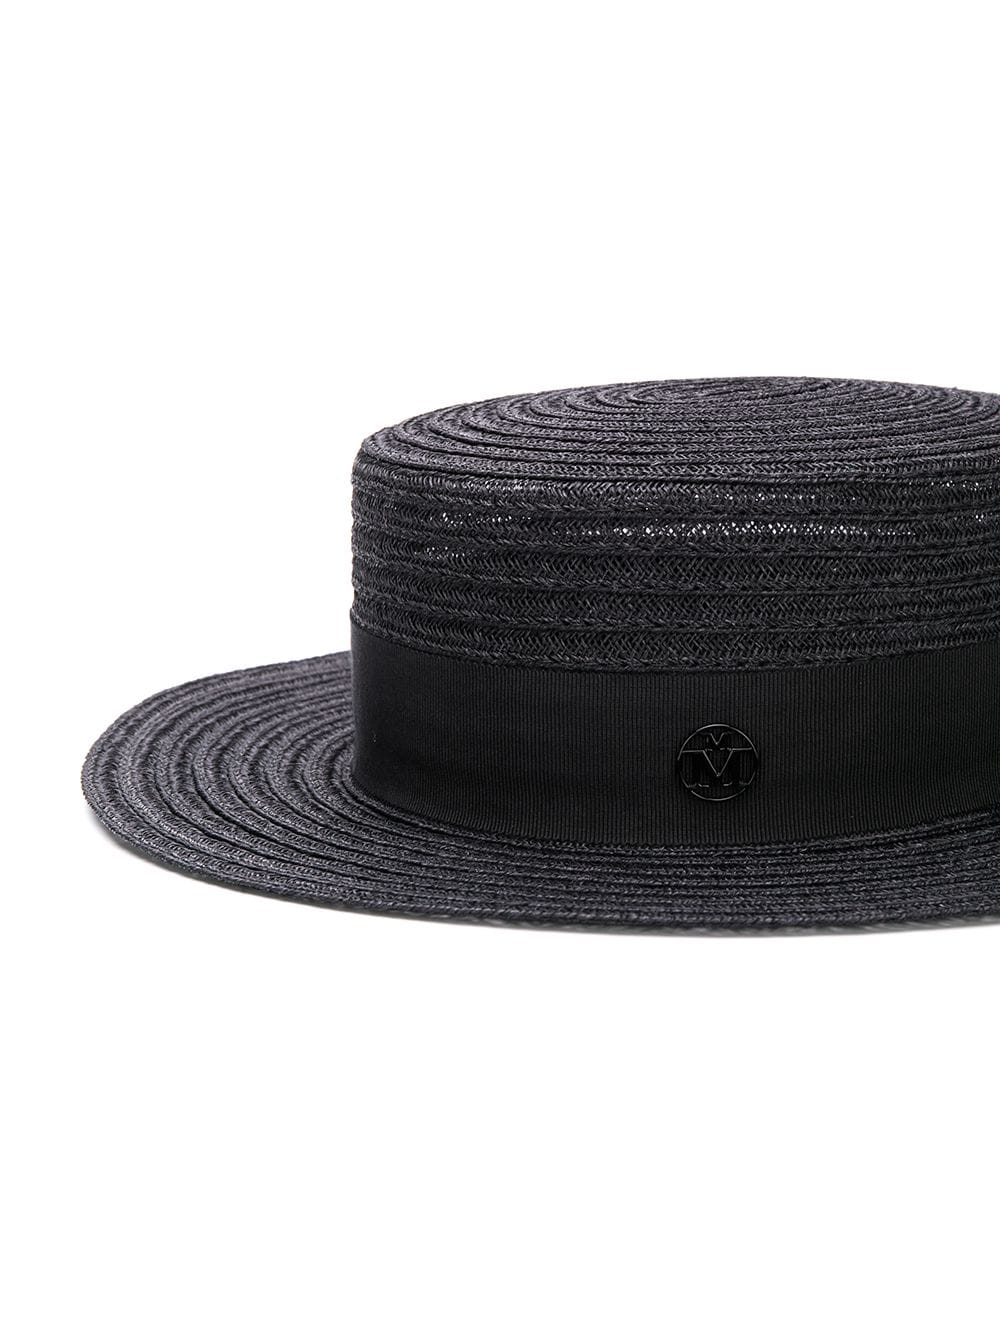 Maison Michel Kiki hoed - Zwart